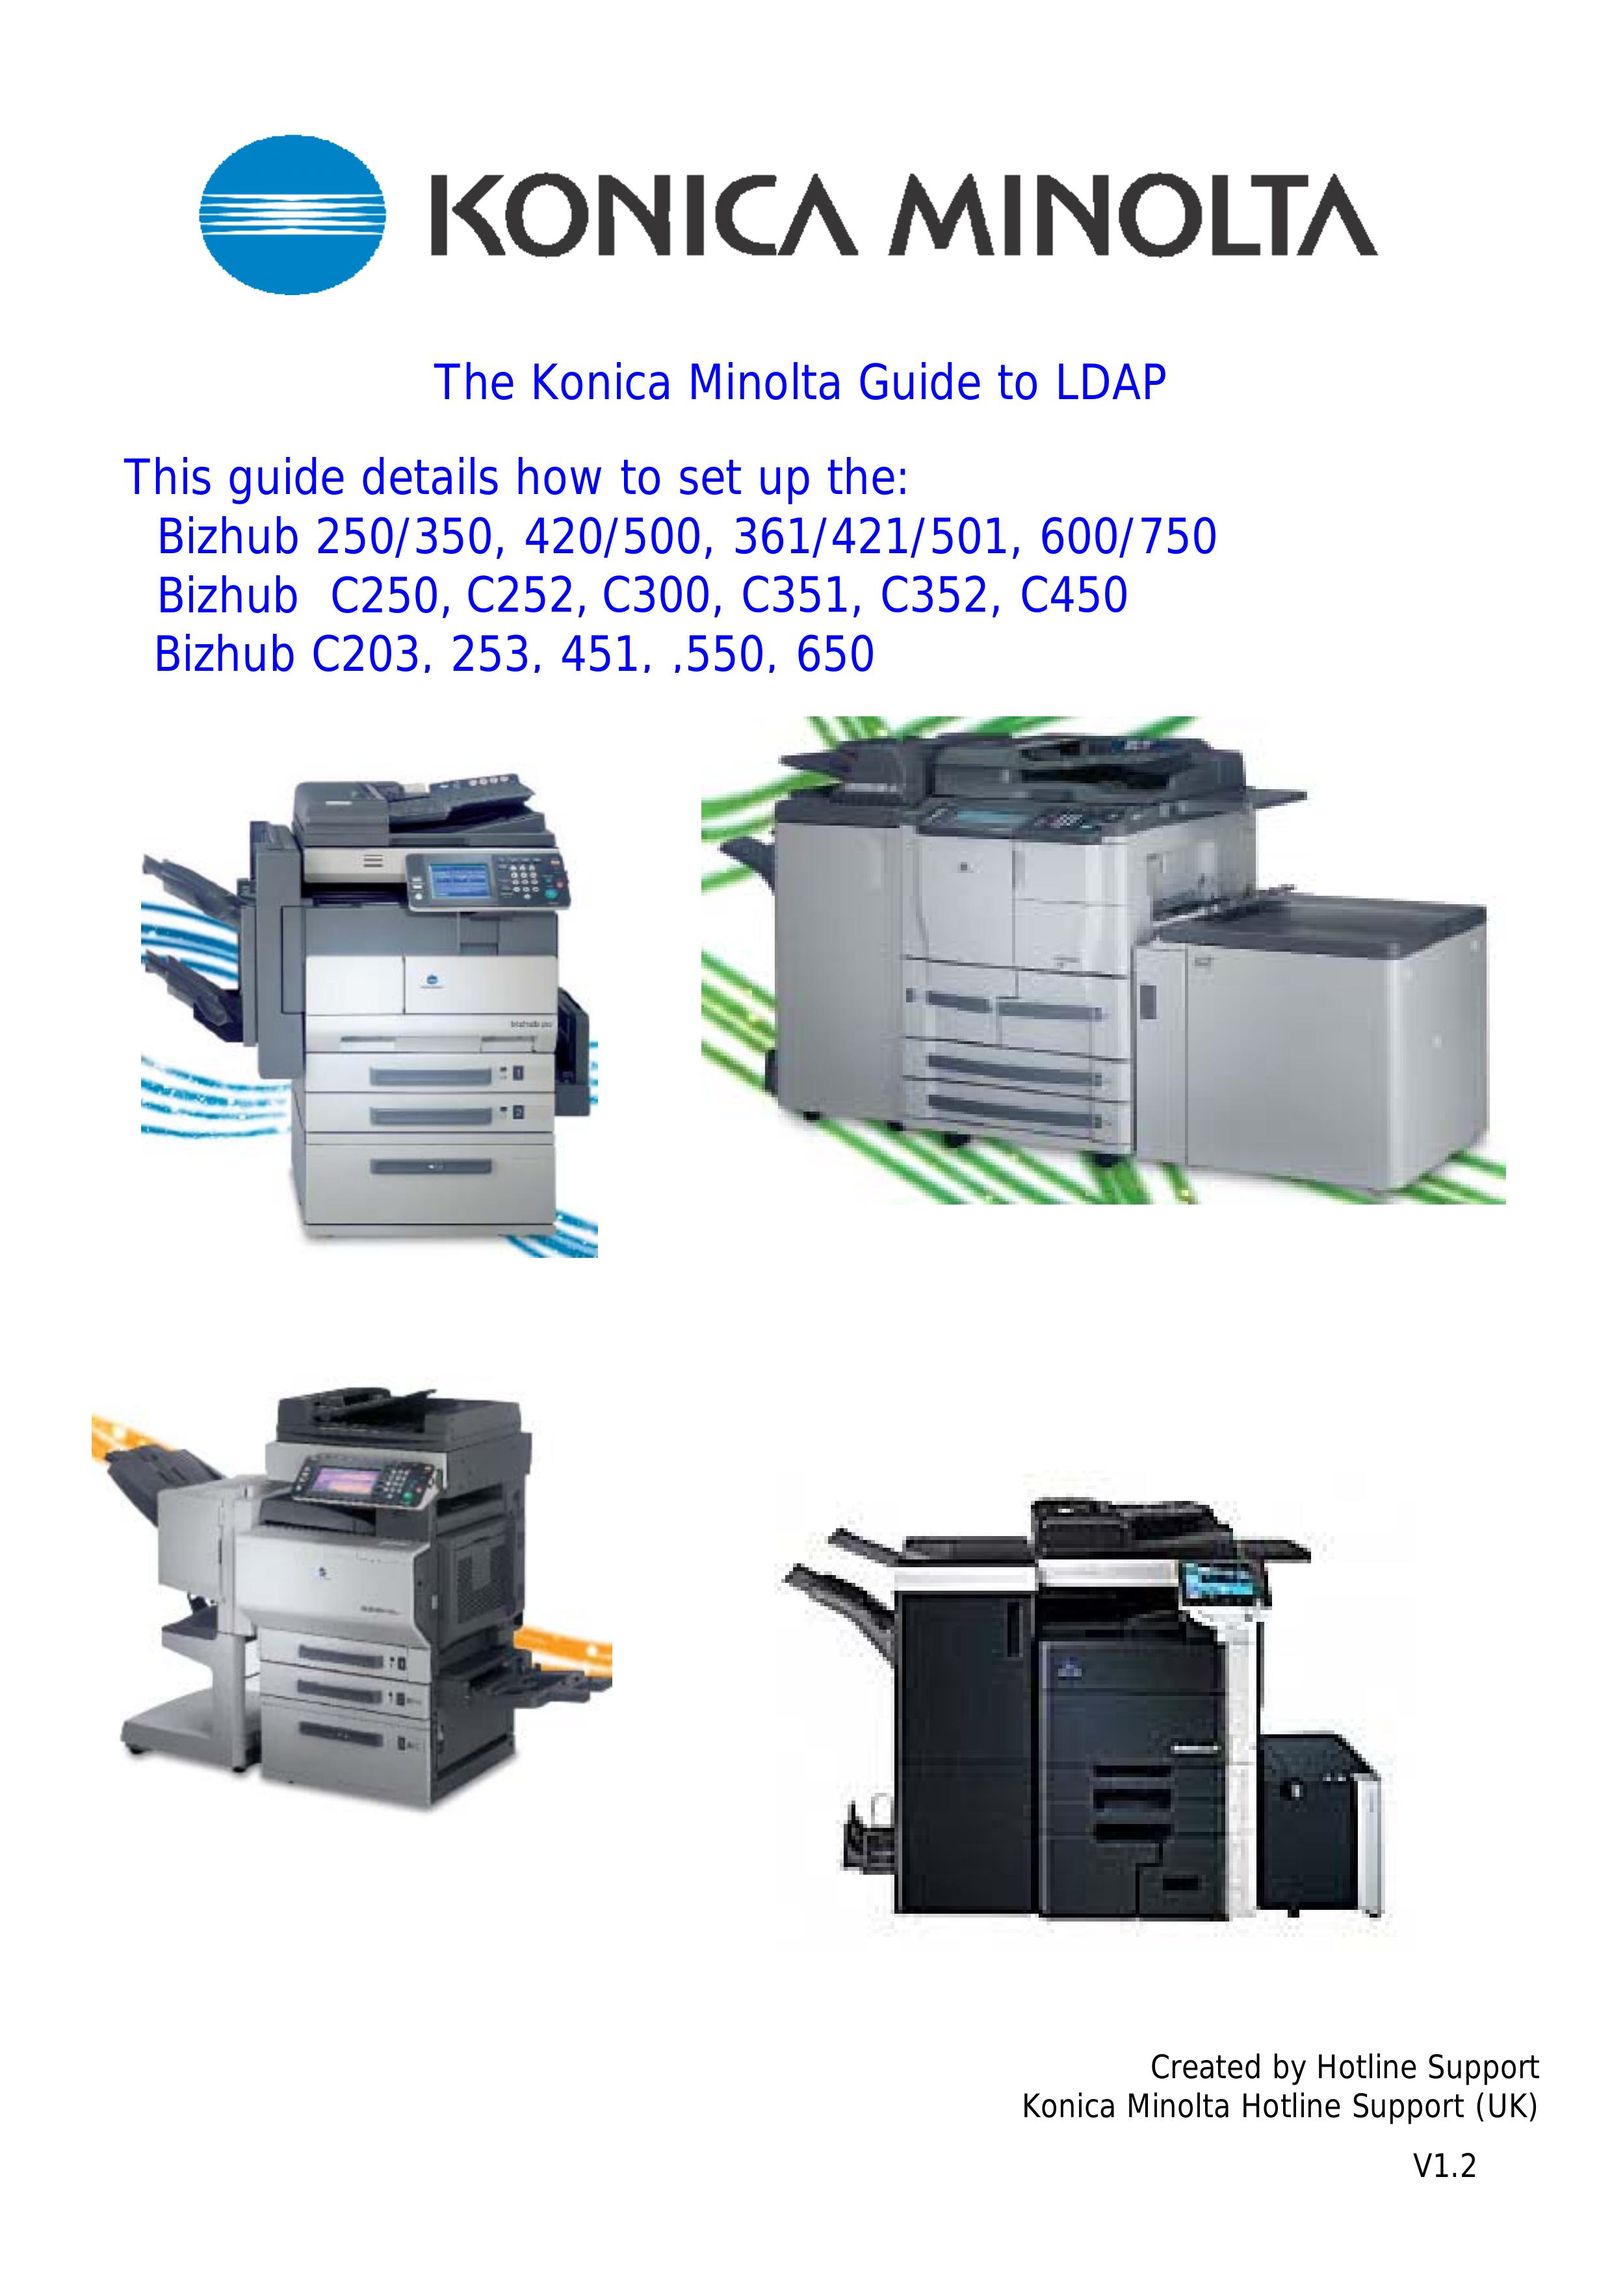 Konica Minolta 451 All in One Printer User Manual